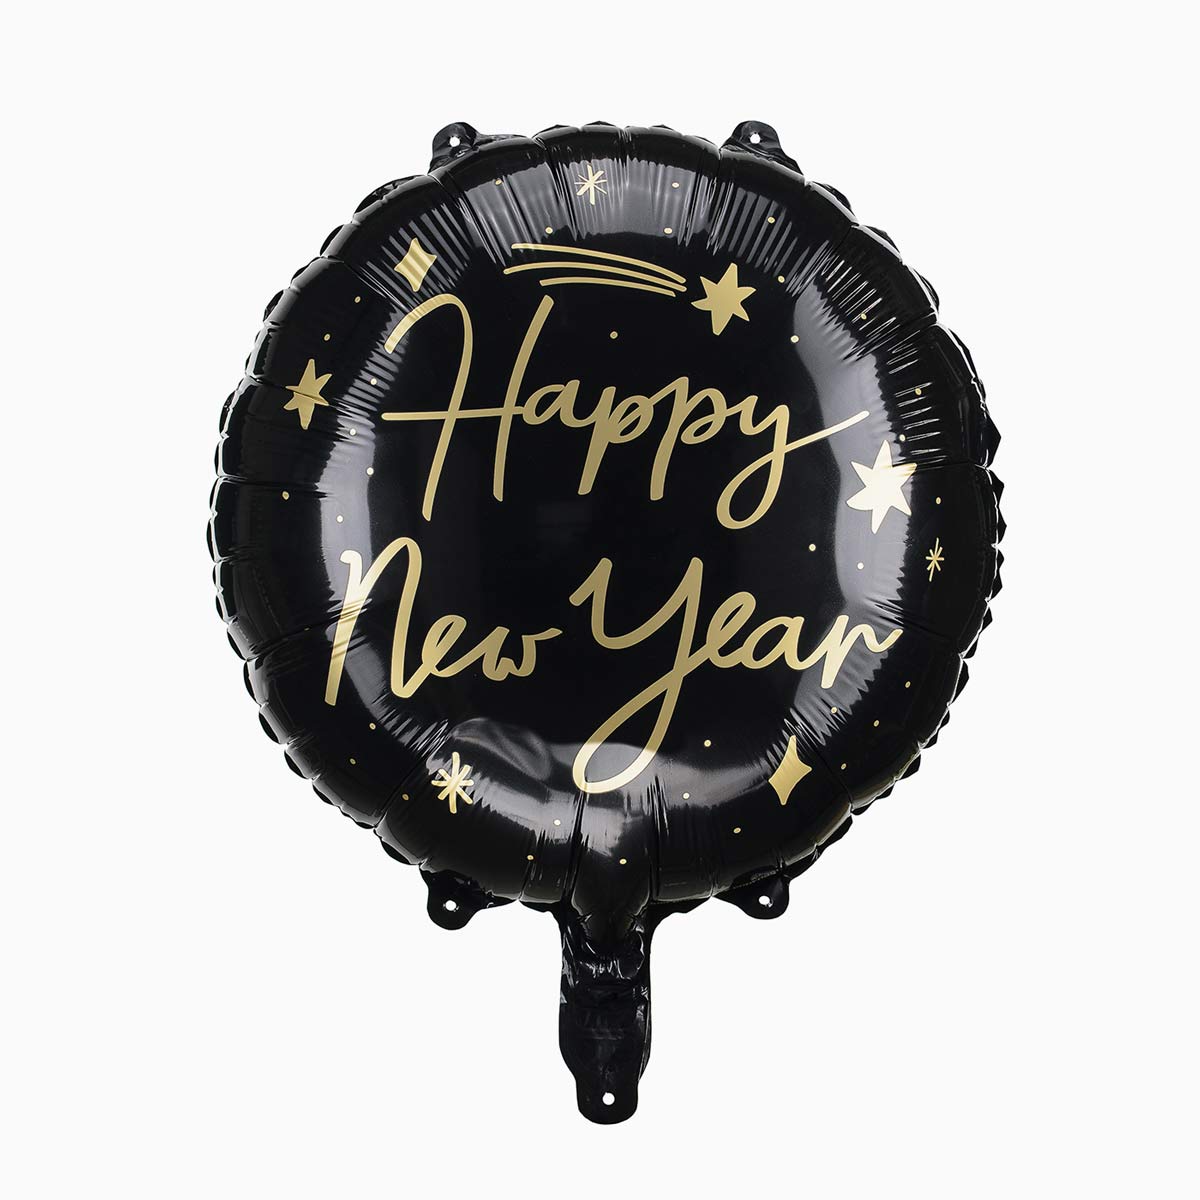 Fail Globe "Frohes neues Jahr"